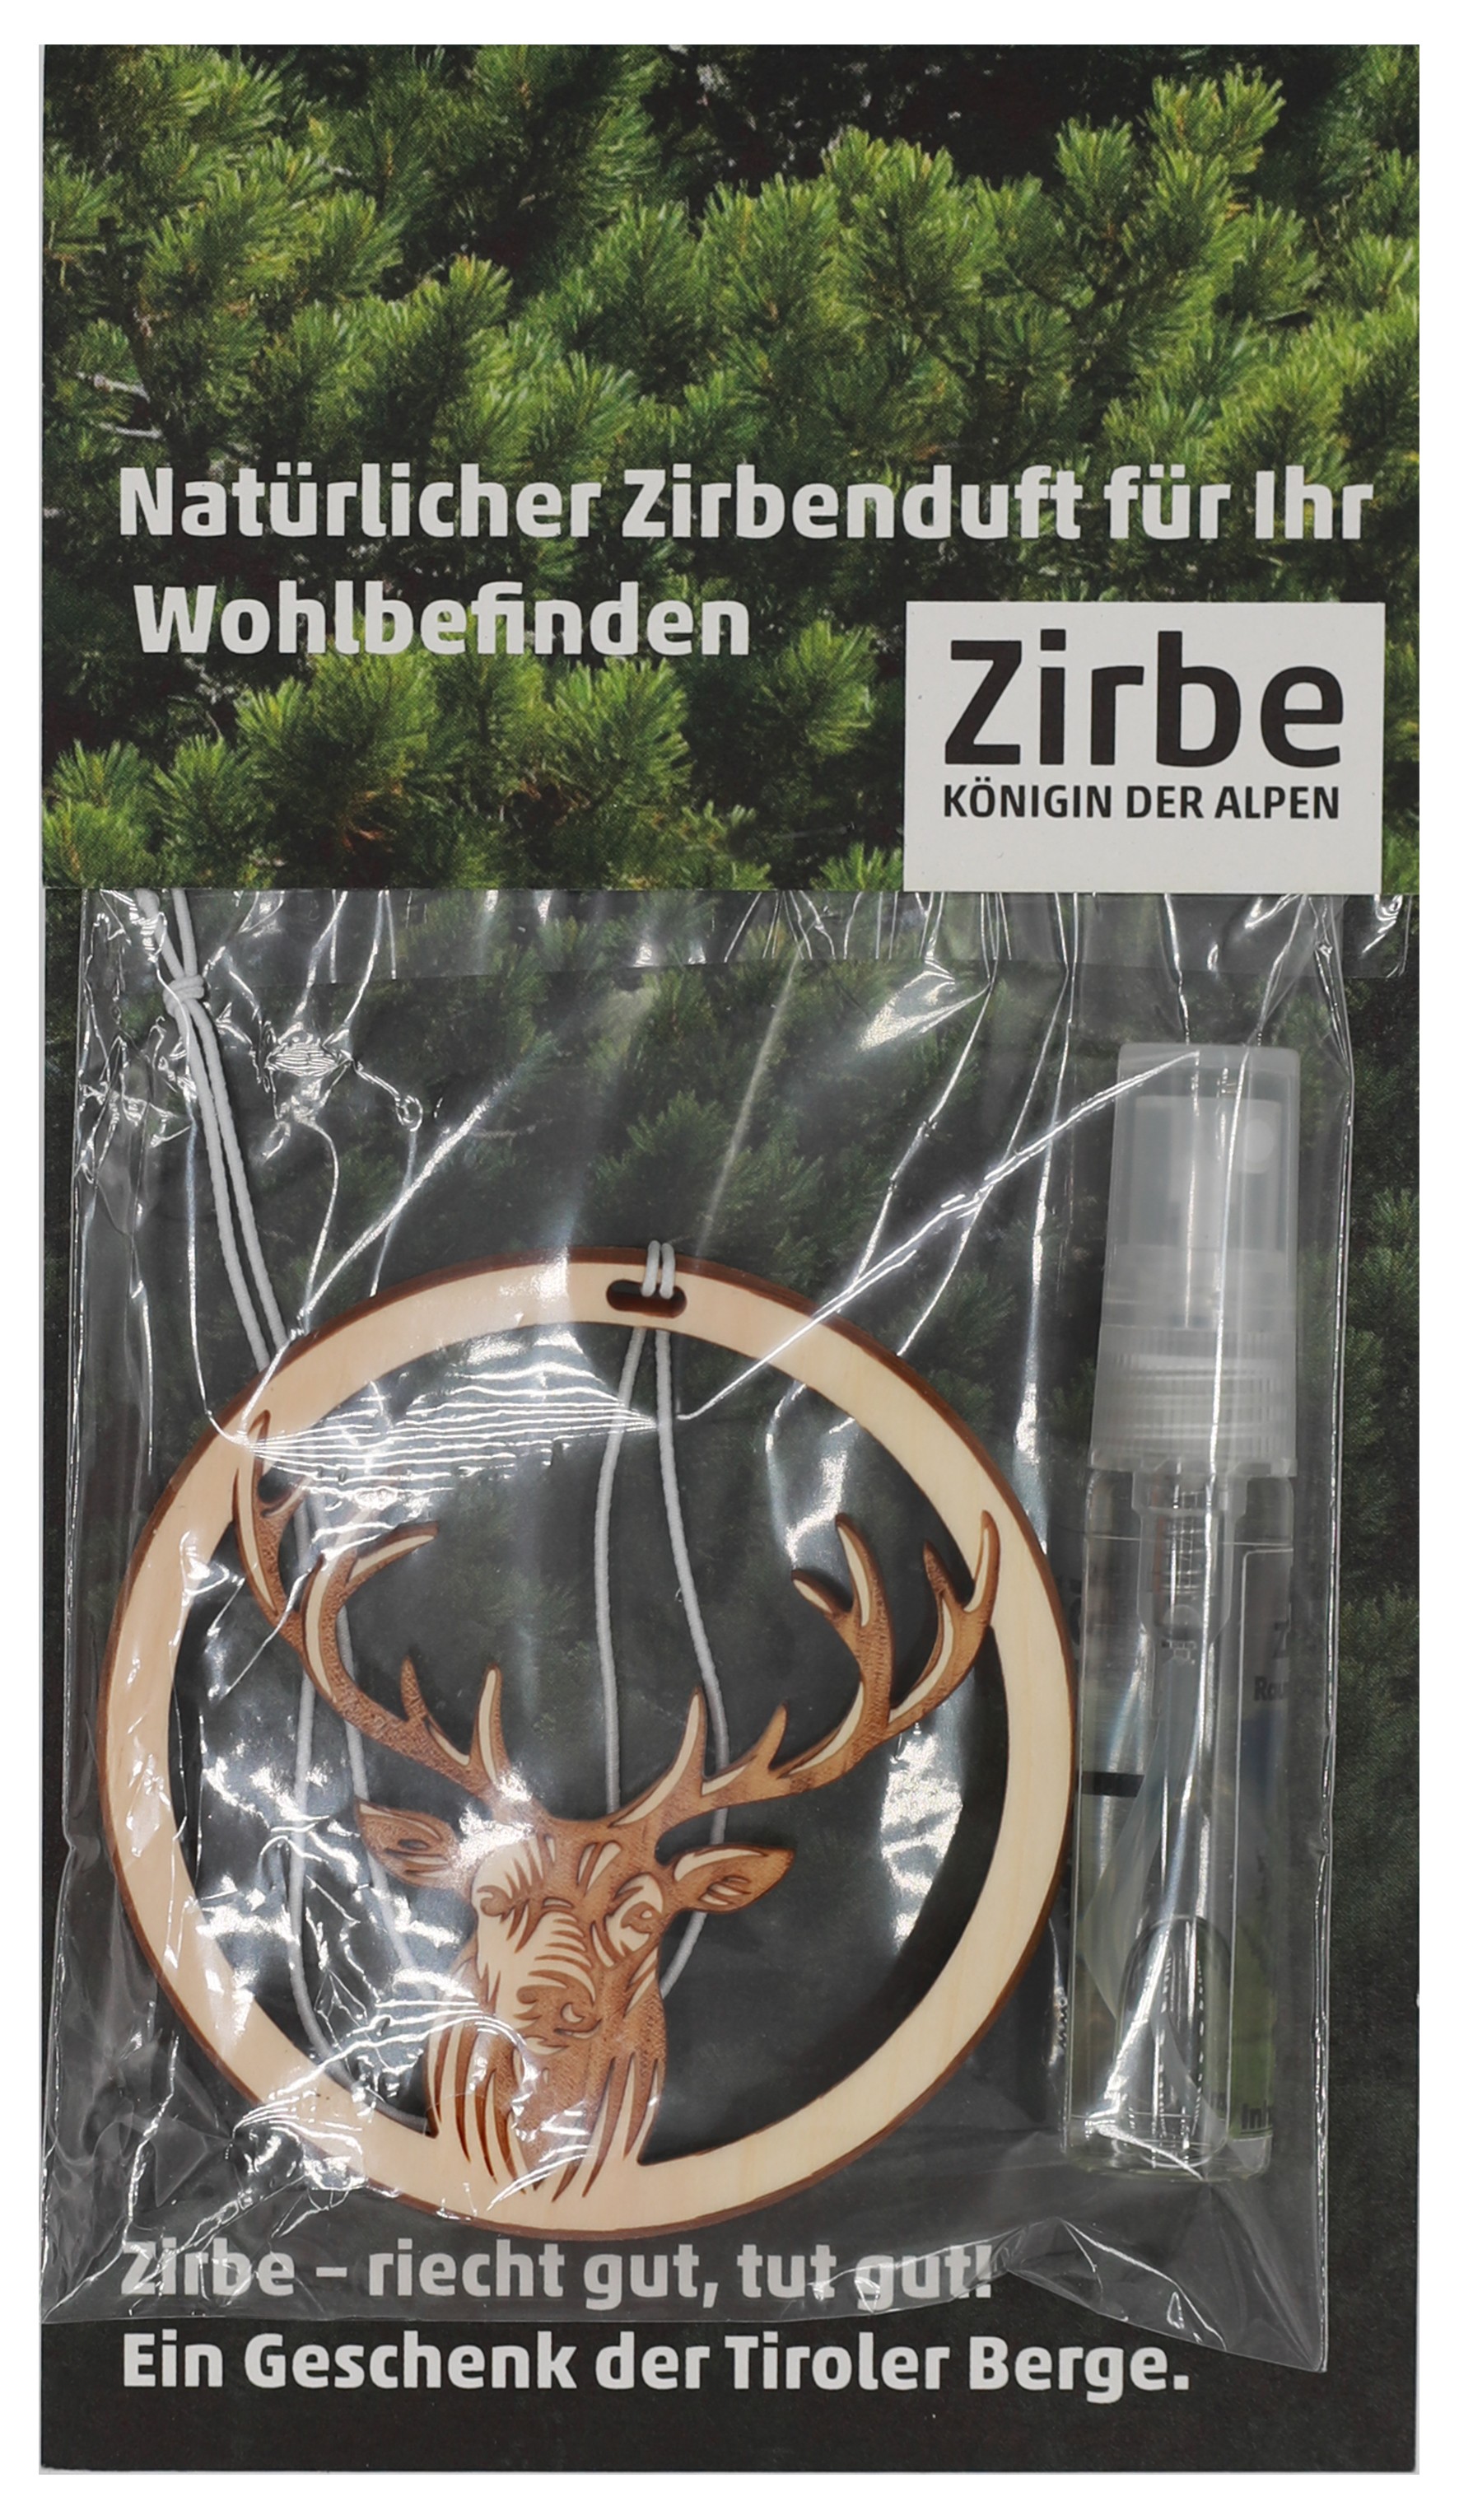 Zirbenduft mit Refresher Zirbenduft, Wunderbaum bedruckt als Werbeartikel  9327530689